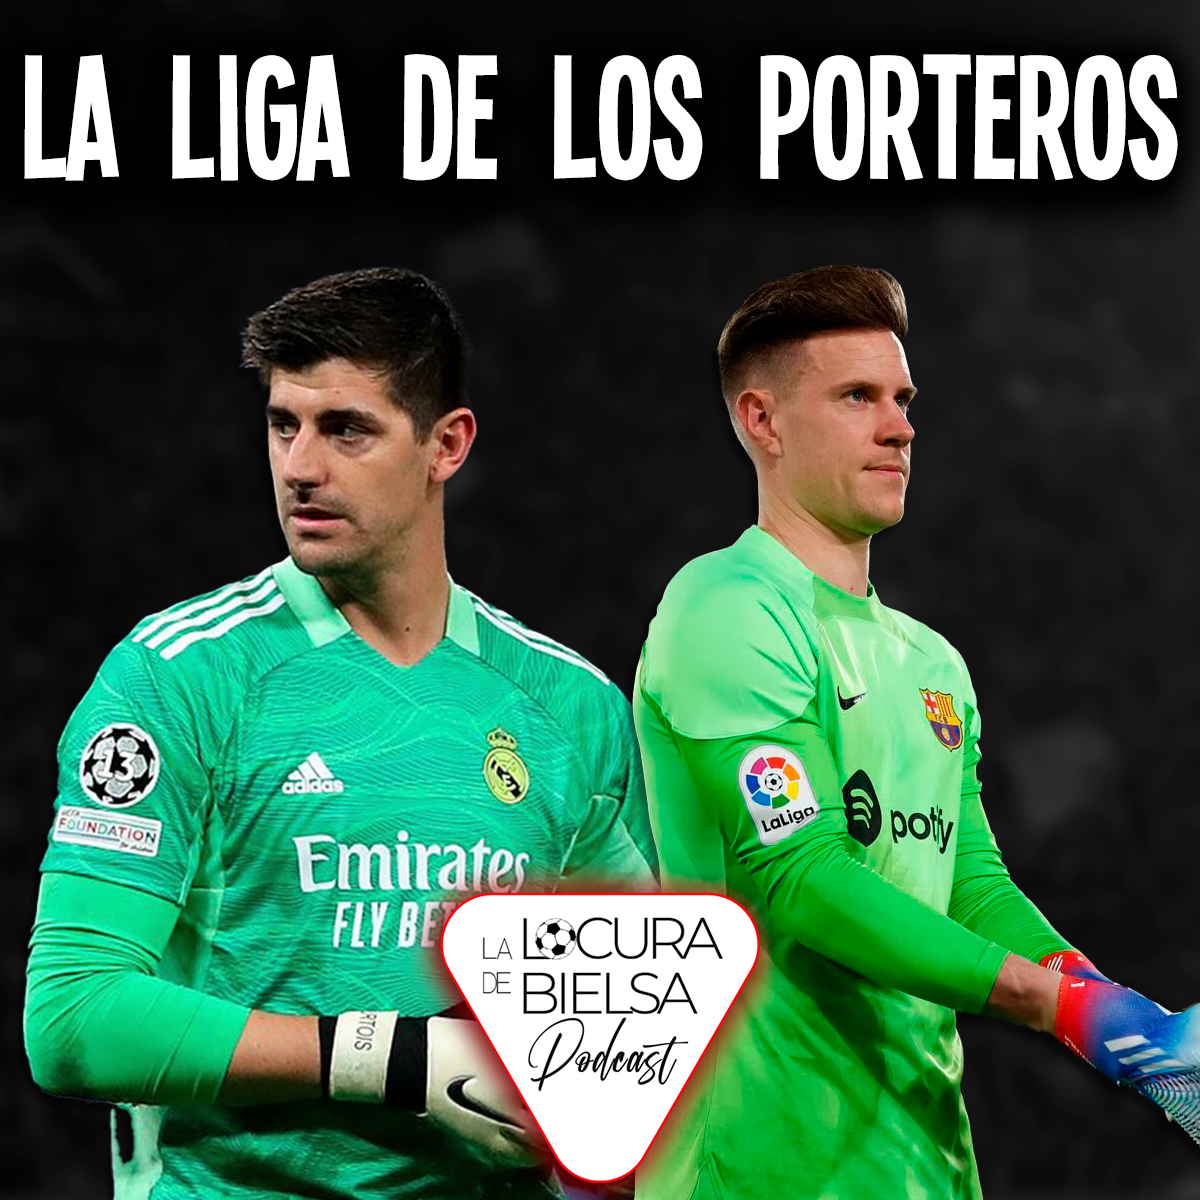 Porteros liga española analisis rendimiento podcast futbol wyscout